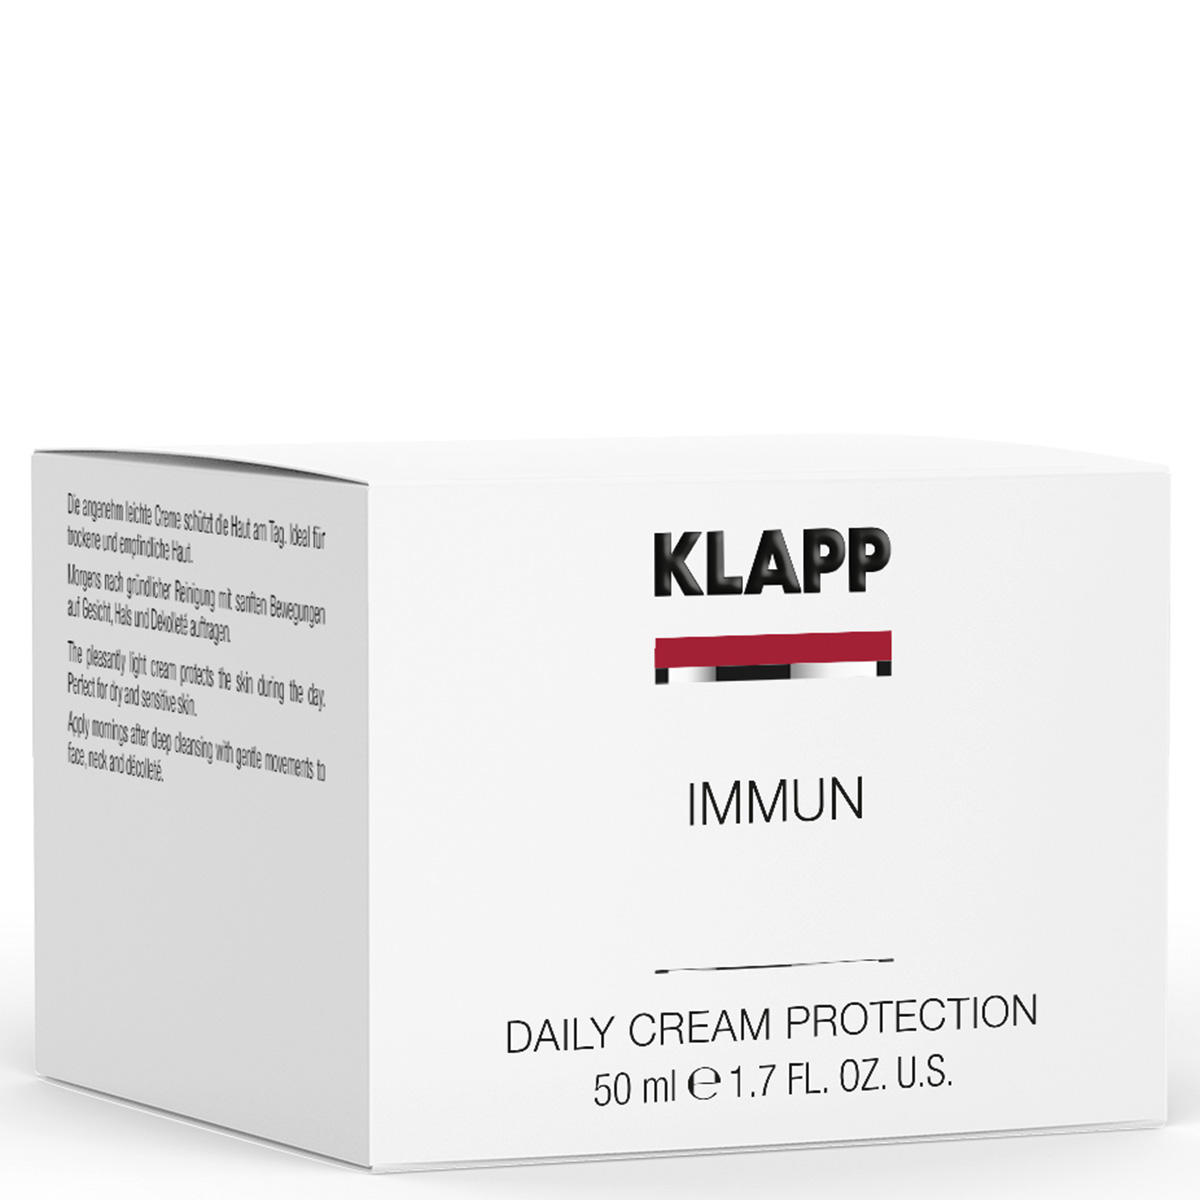 KLAPP IMMUN Daily Cream Protection 50 ml - 2